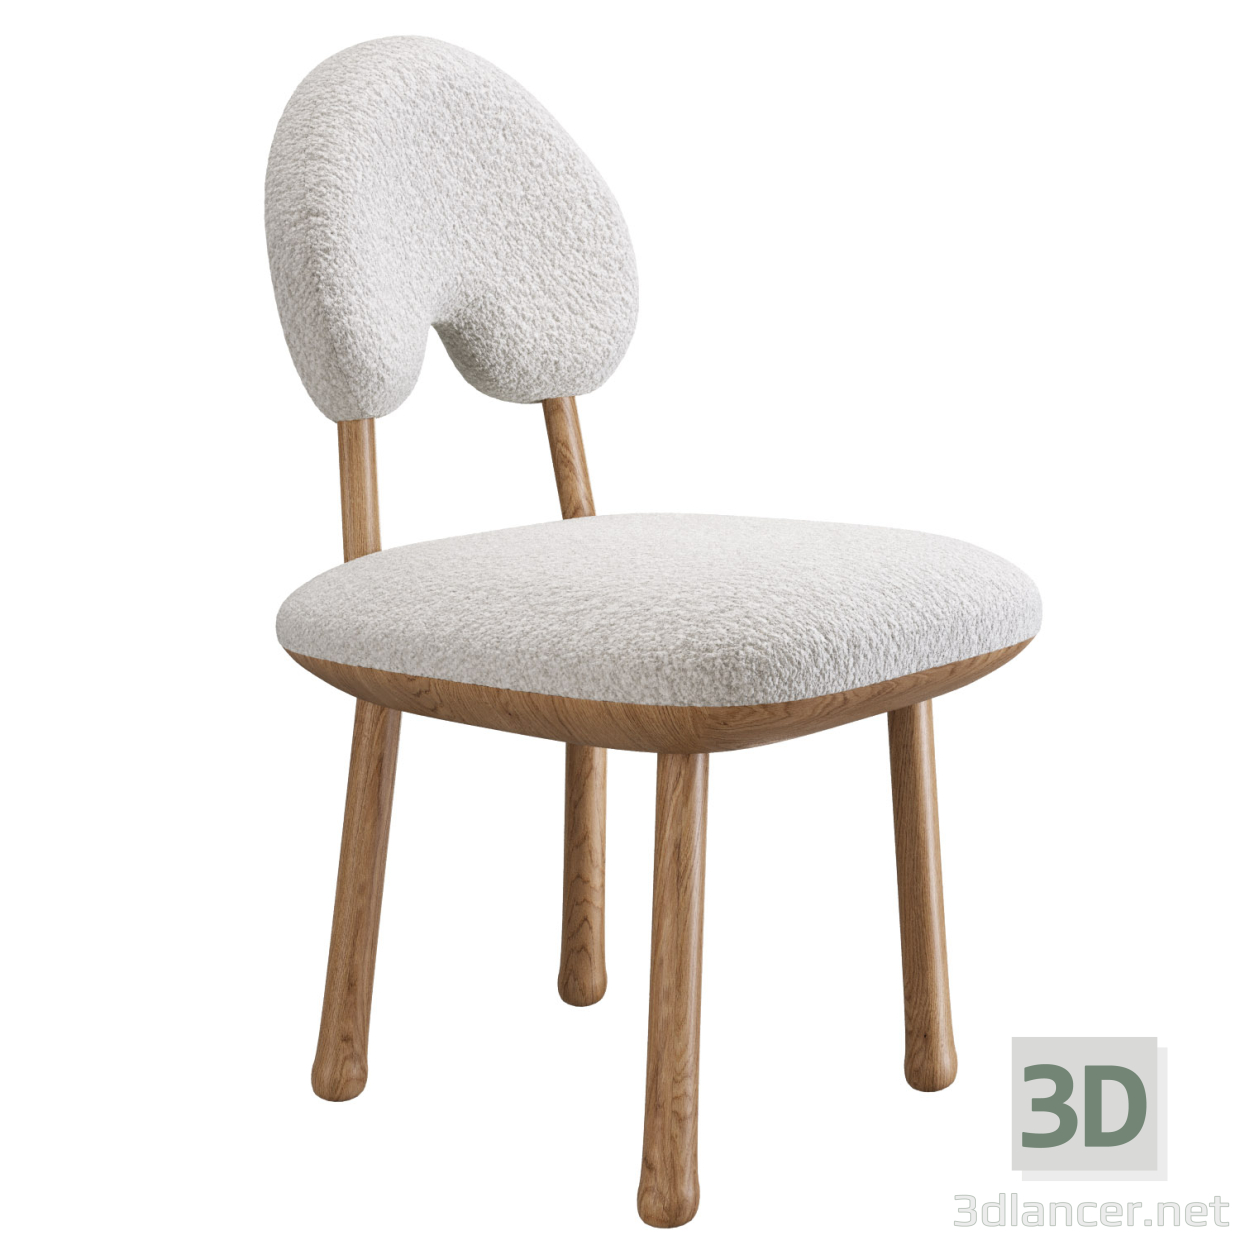 3d Designer makeup chair Solid wood chair model buy - render